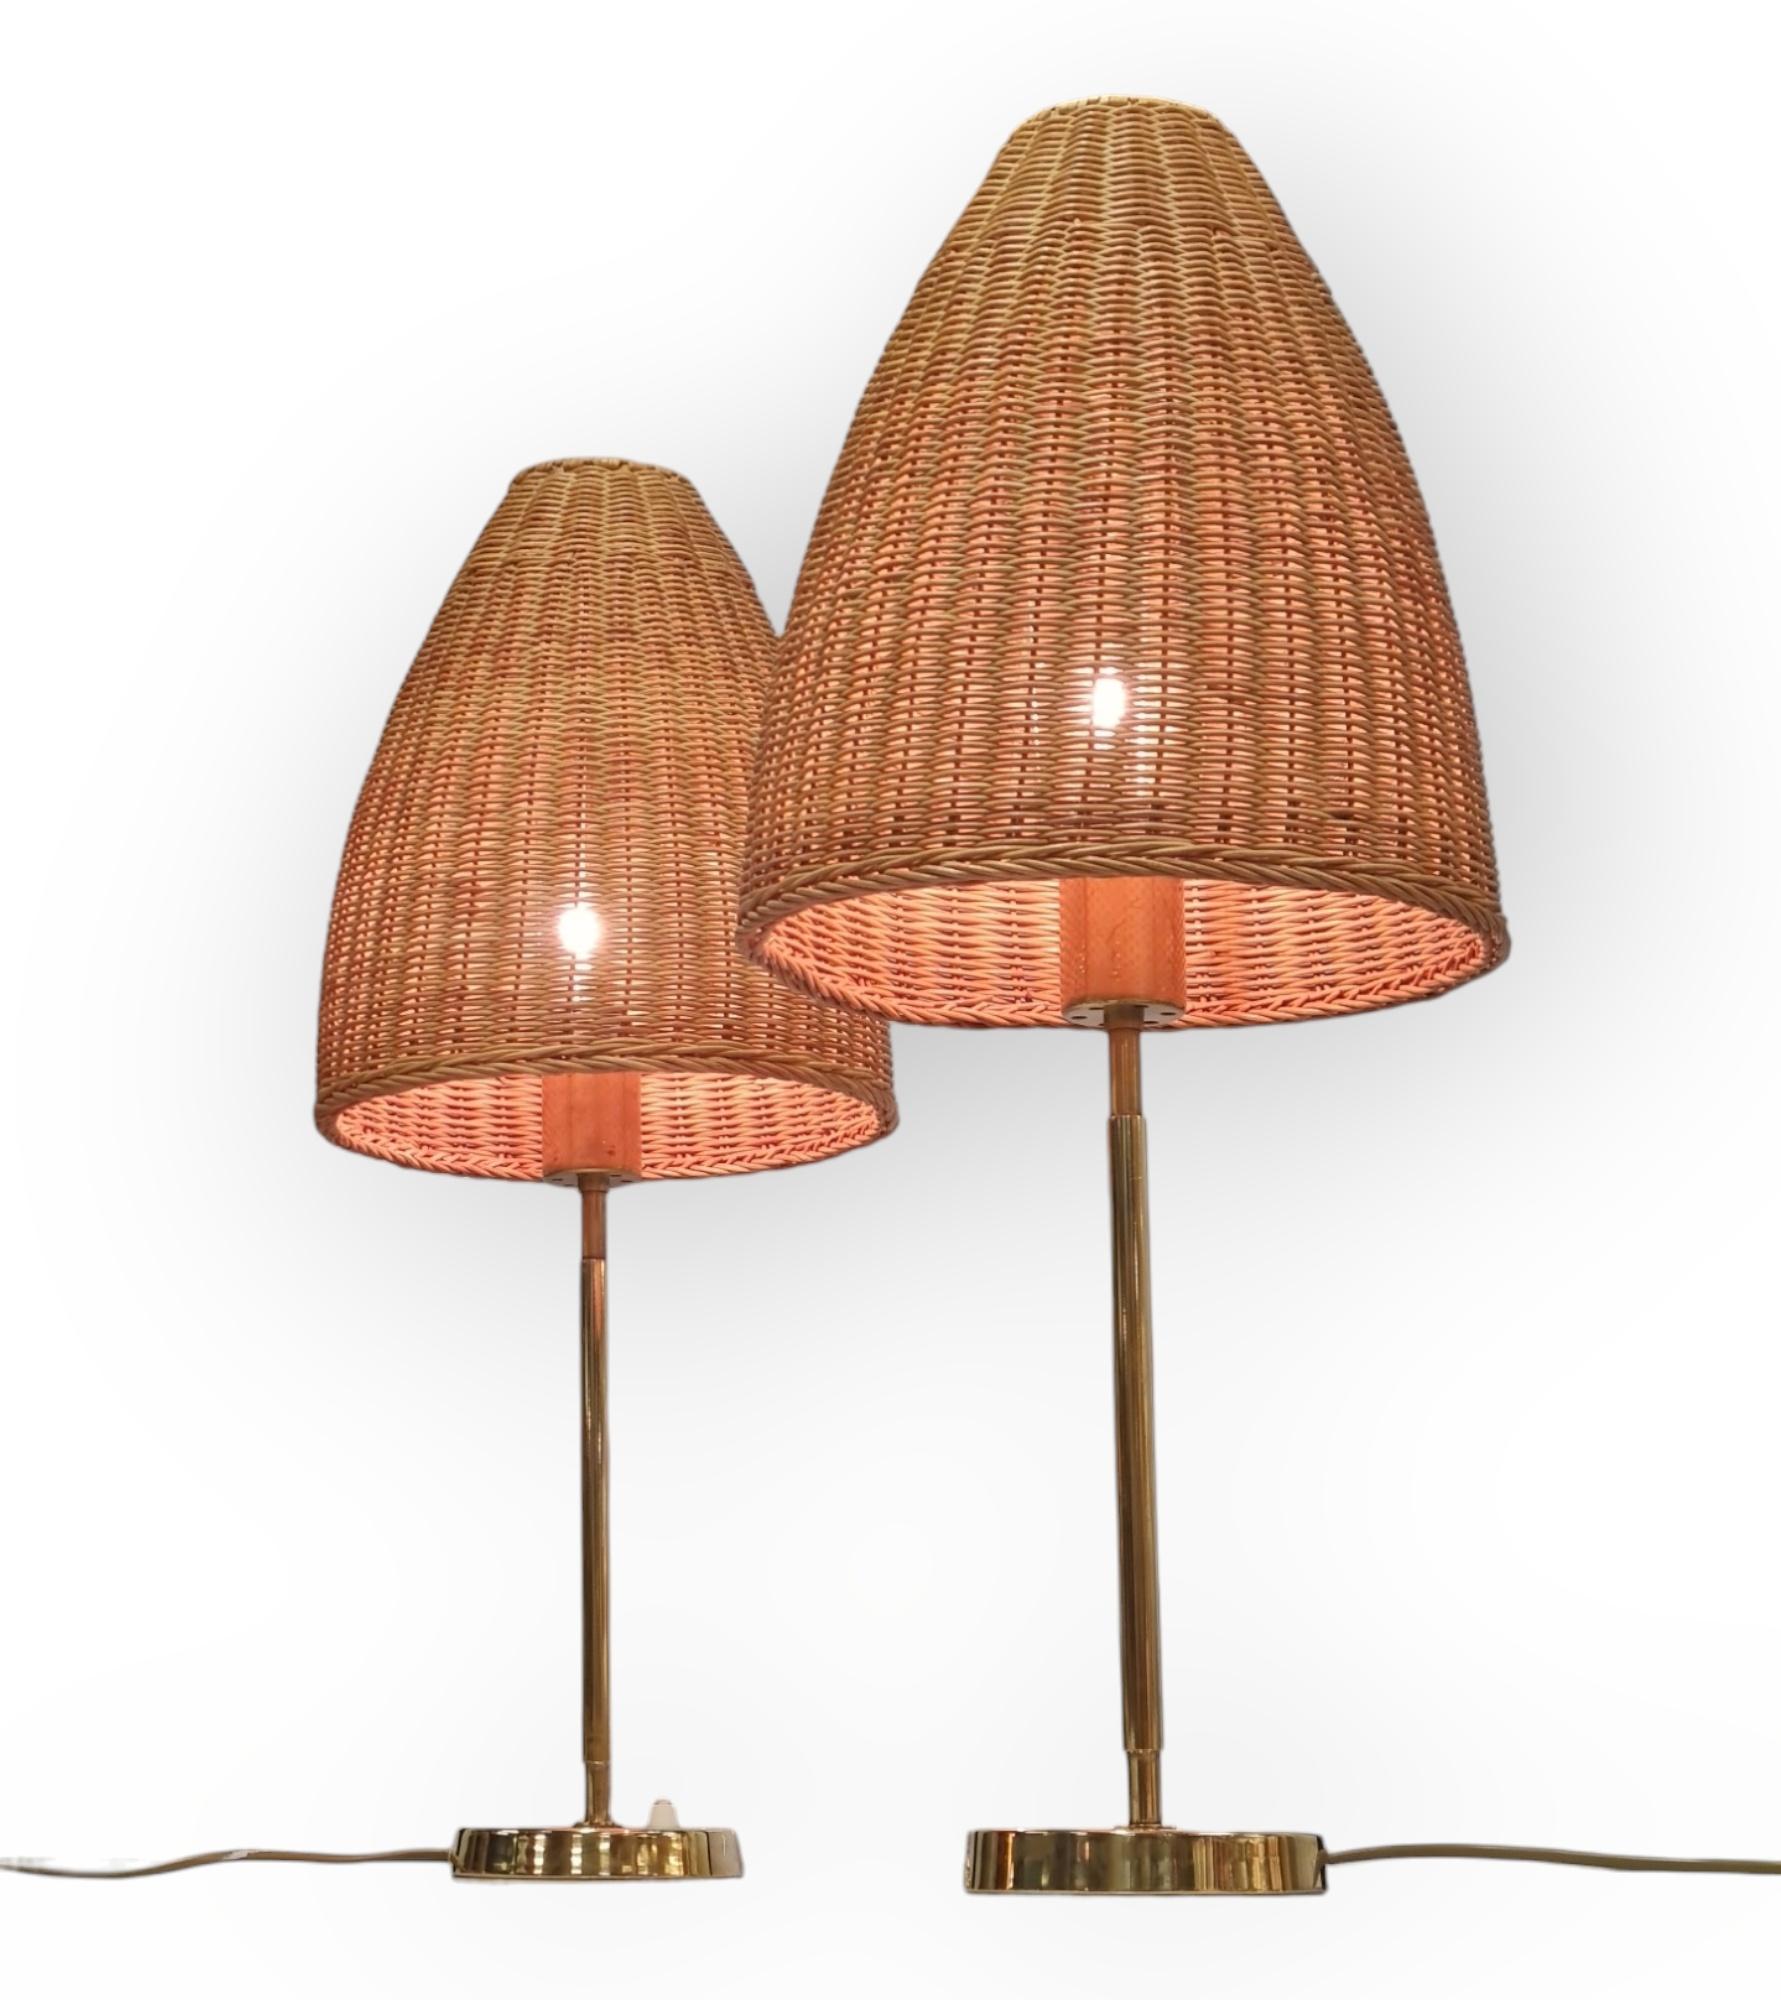 Brass Rare Pair of Maija Heikinheimo Table Lamps Model MH705, Valaistustyö 1960s For Sale